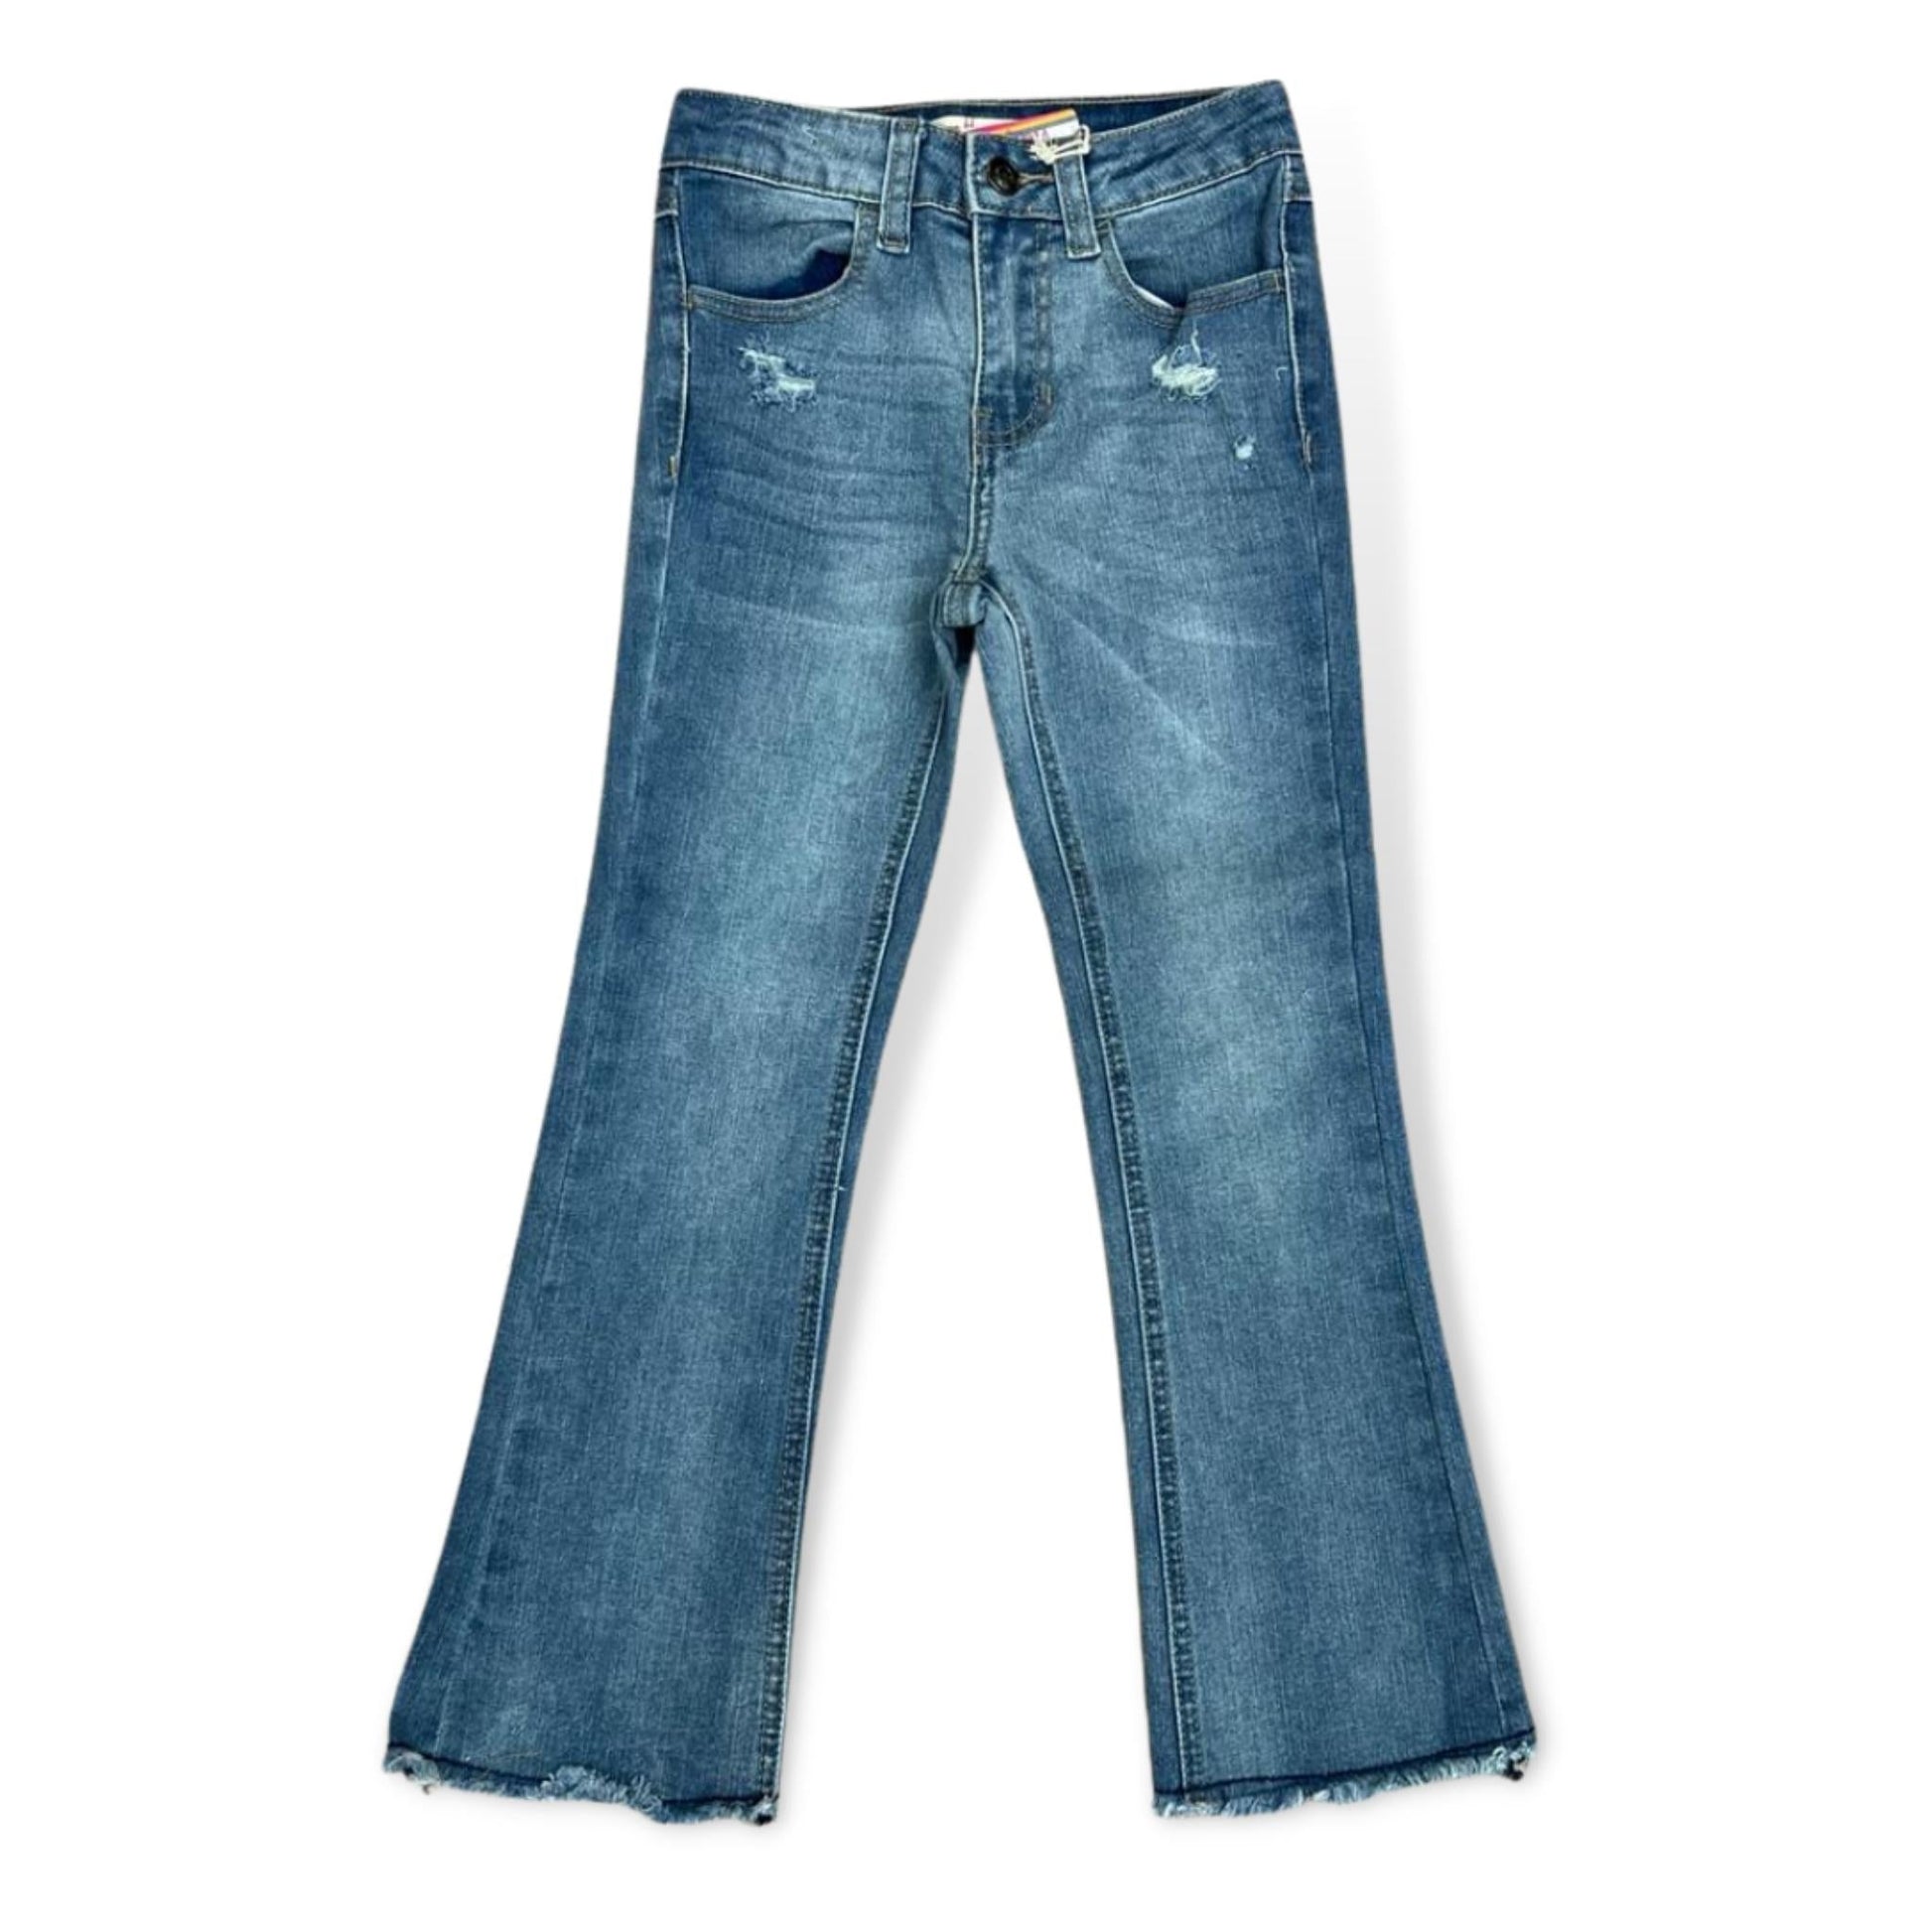 Vintage Havana Light Wash Distressed Flare Jean - a Spirit Animal - jeans $30-$60 $60-$90 10